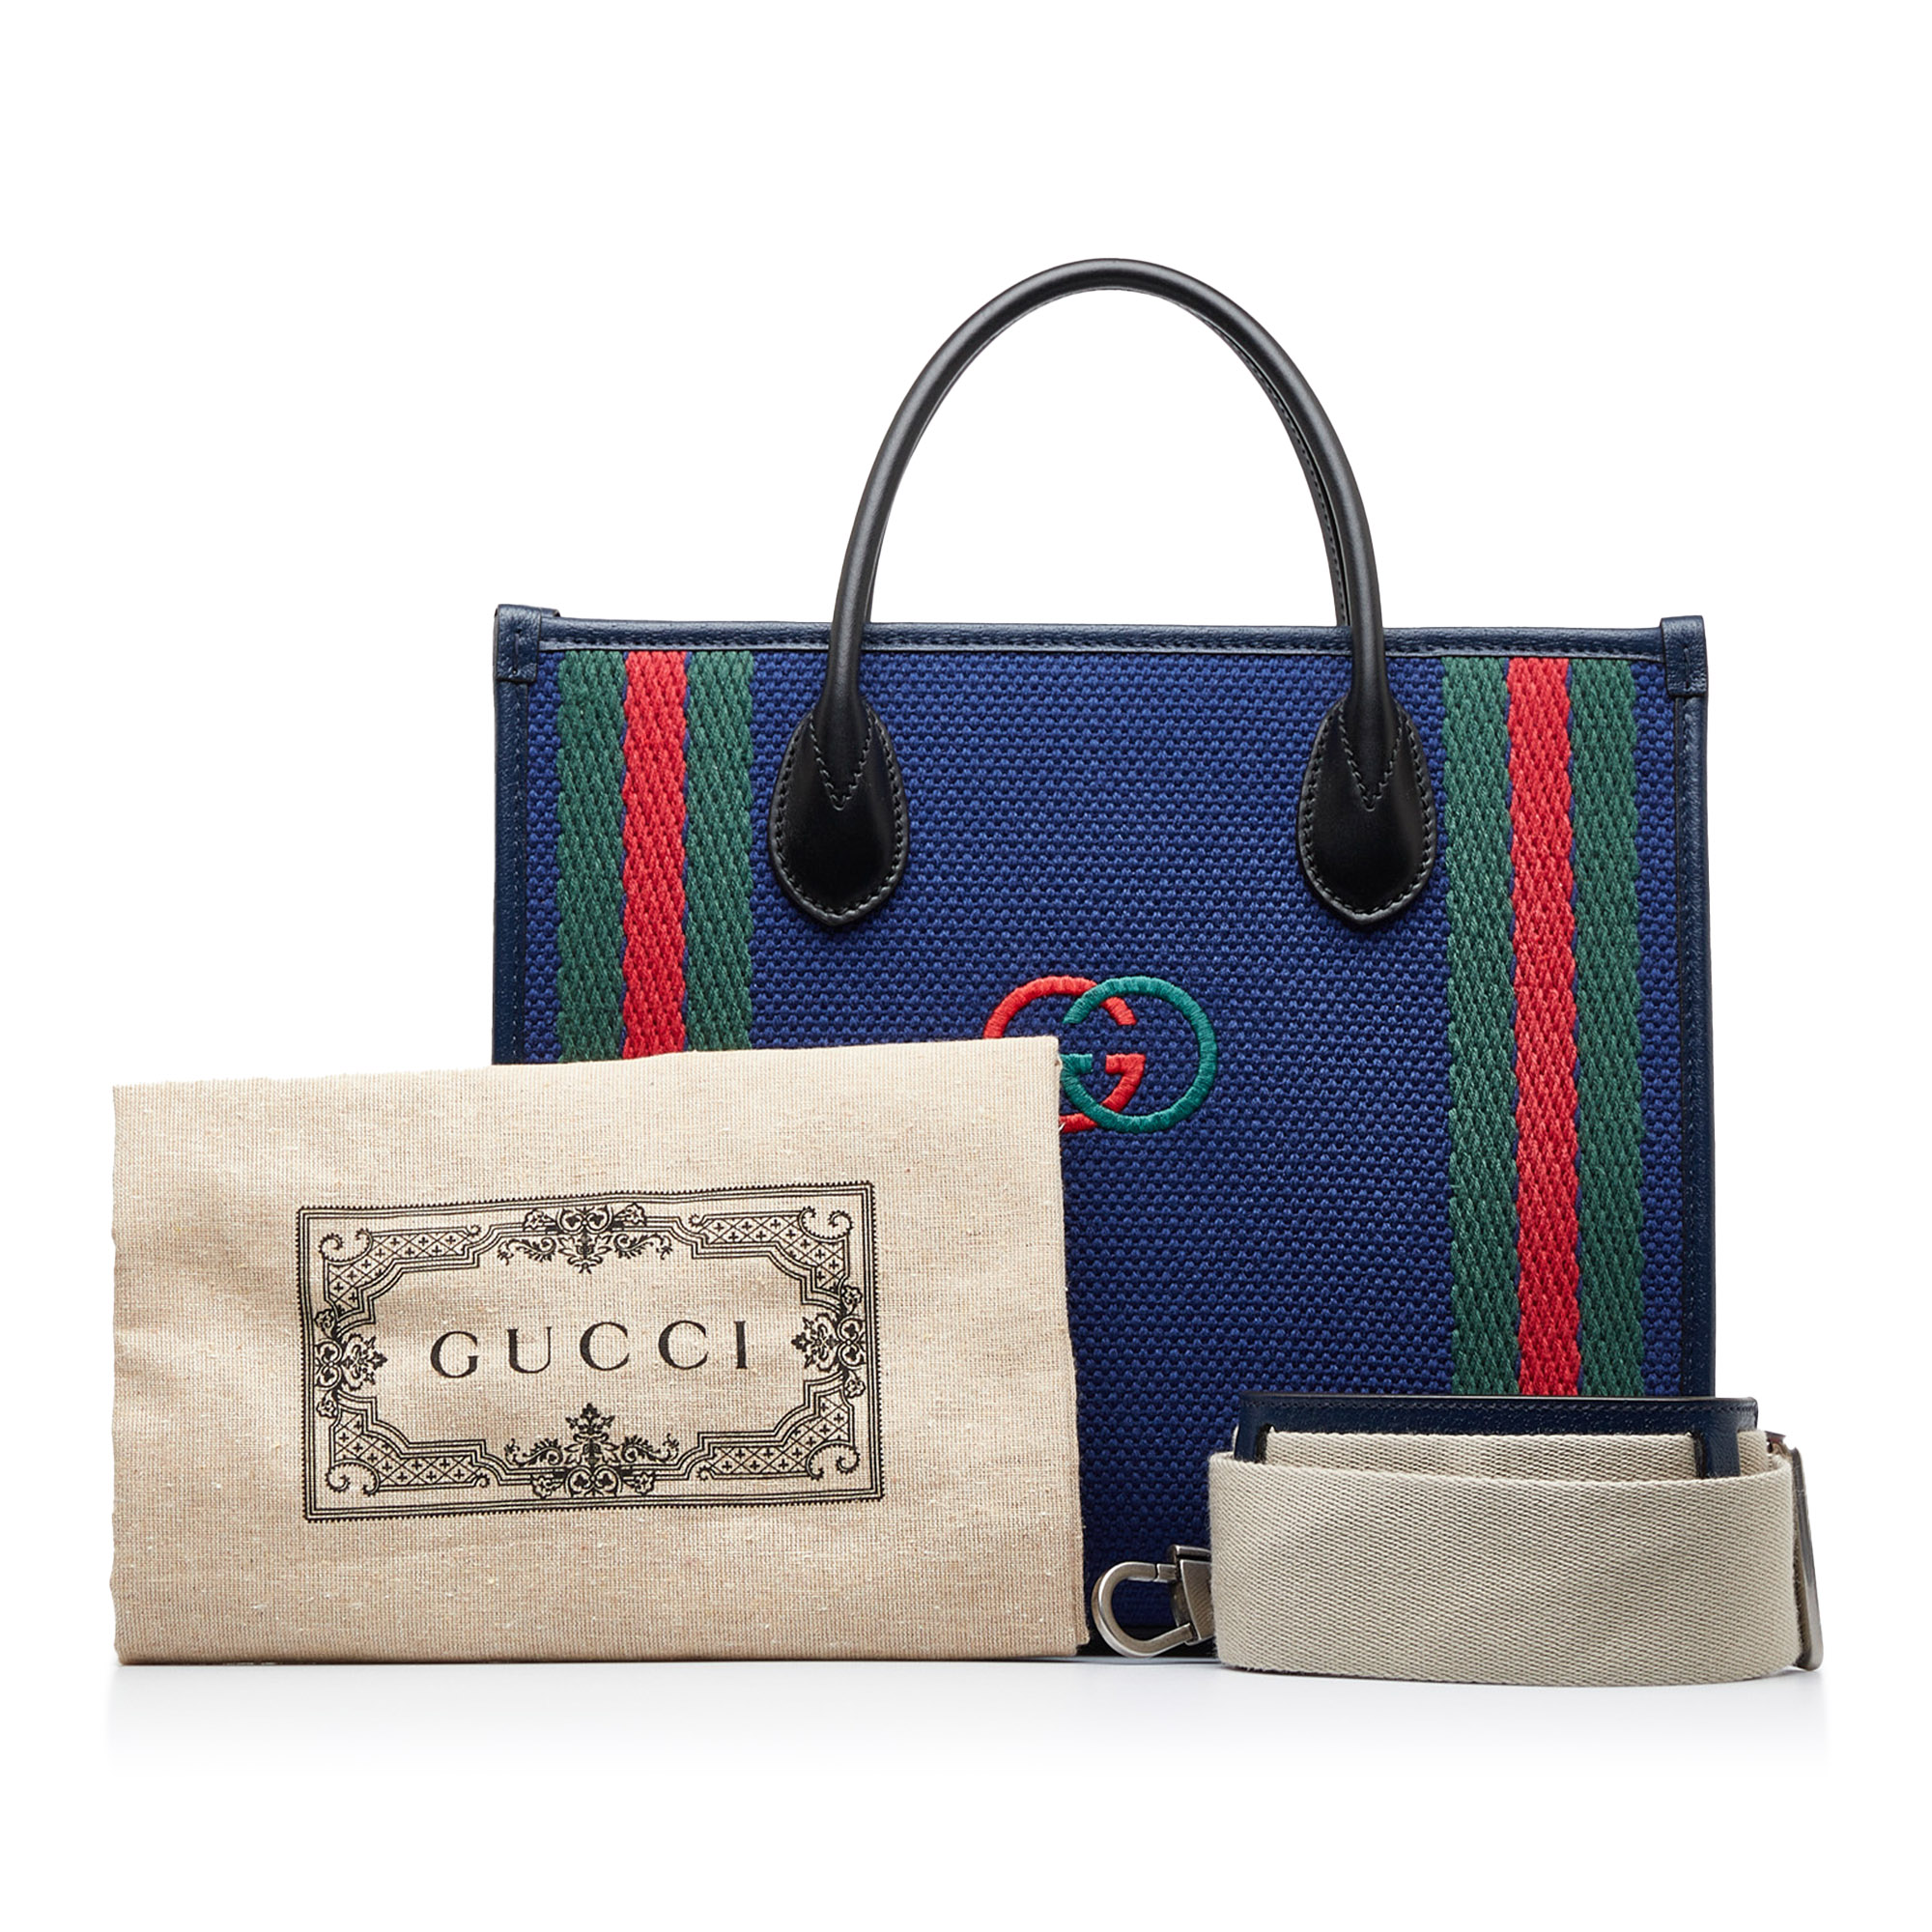 Gucci Multicolour Interlocking G Satchel